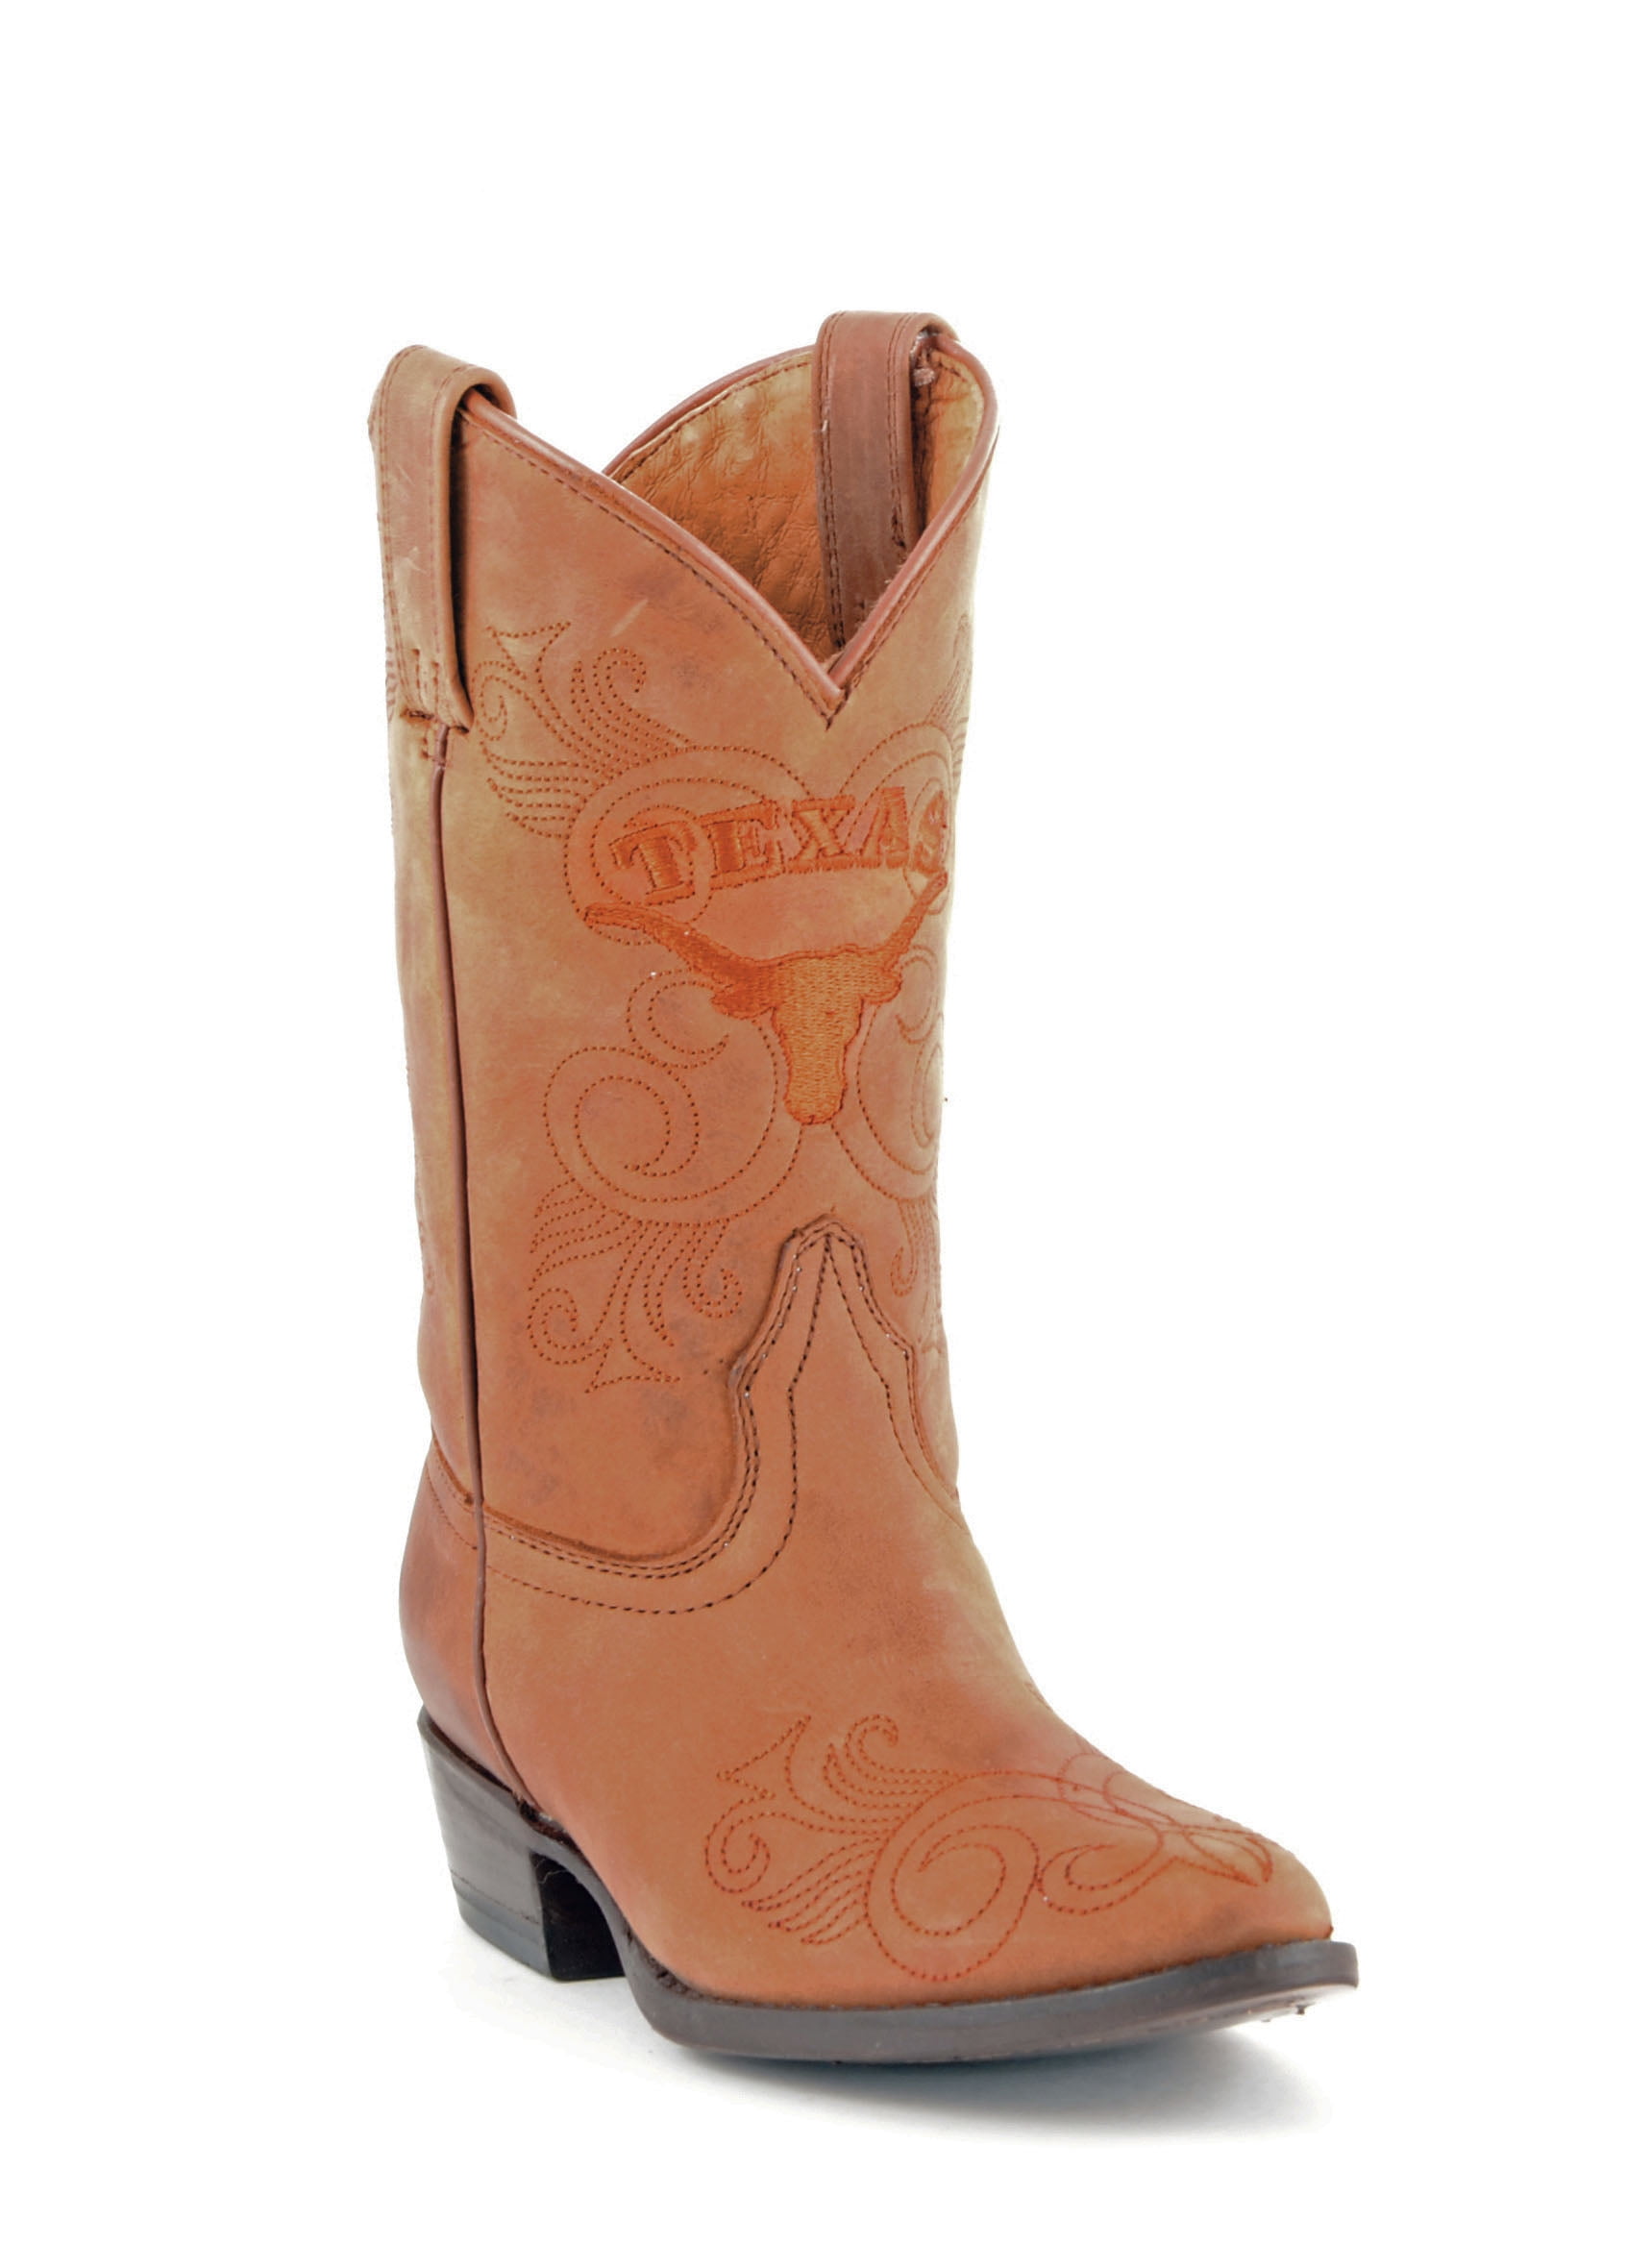 walmart cowboy boots for girls